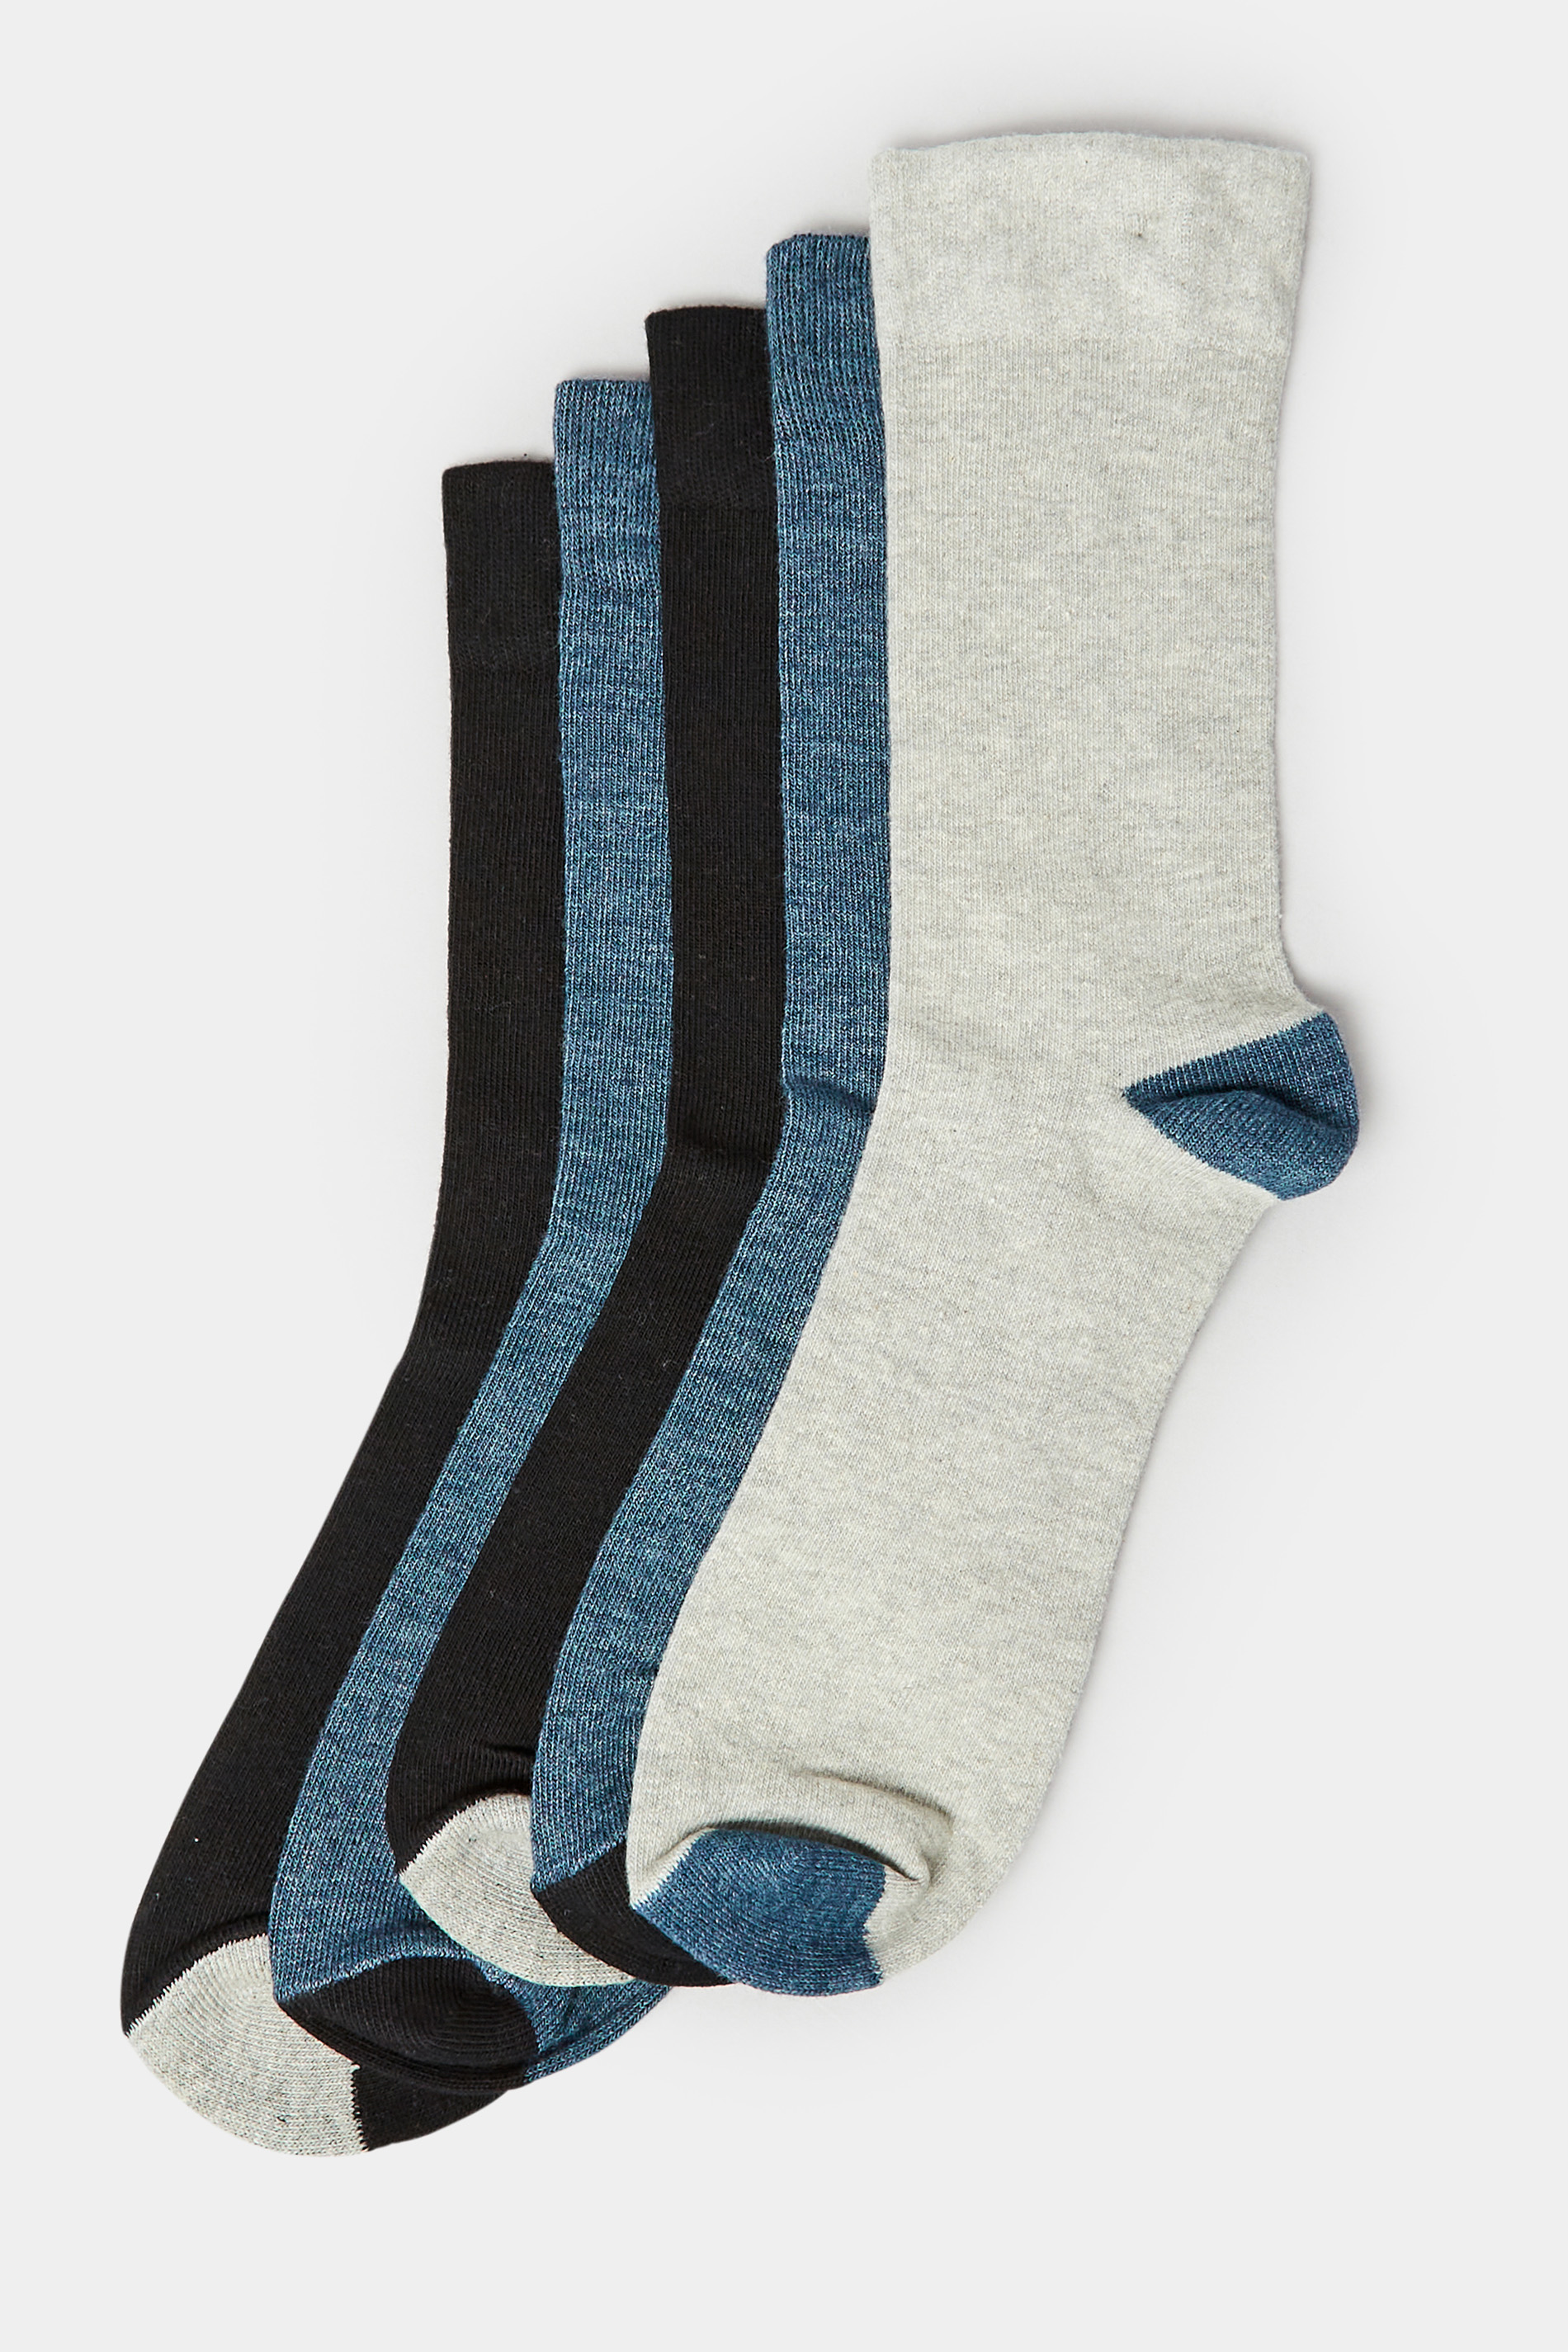 BadRhino Blue 5 Pack Heel & Toe Socks | BadRhino 3